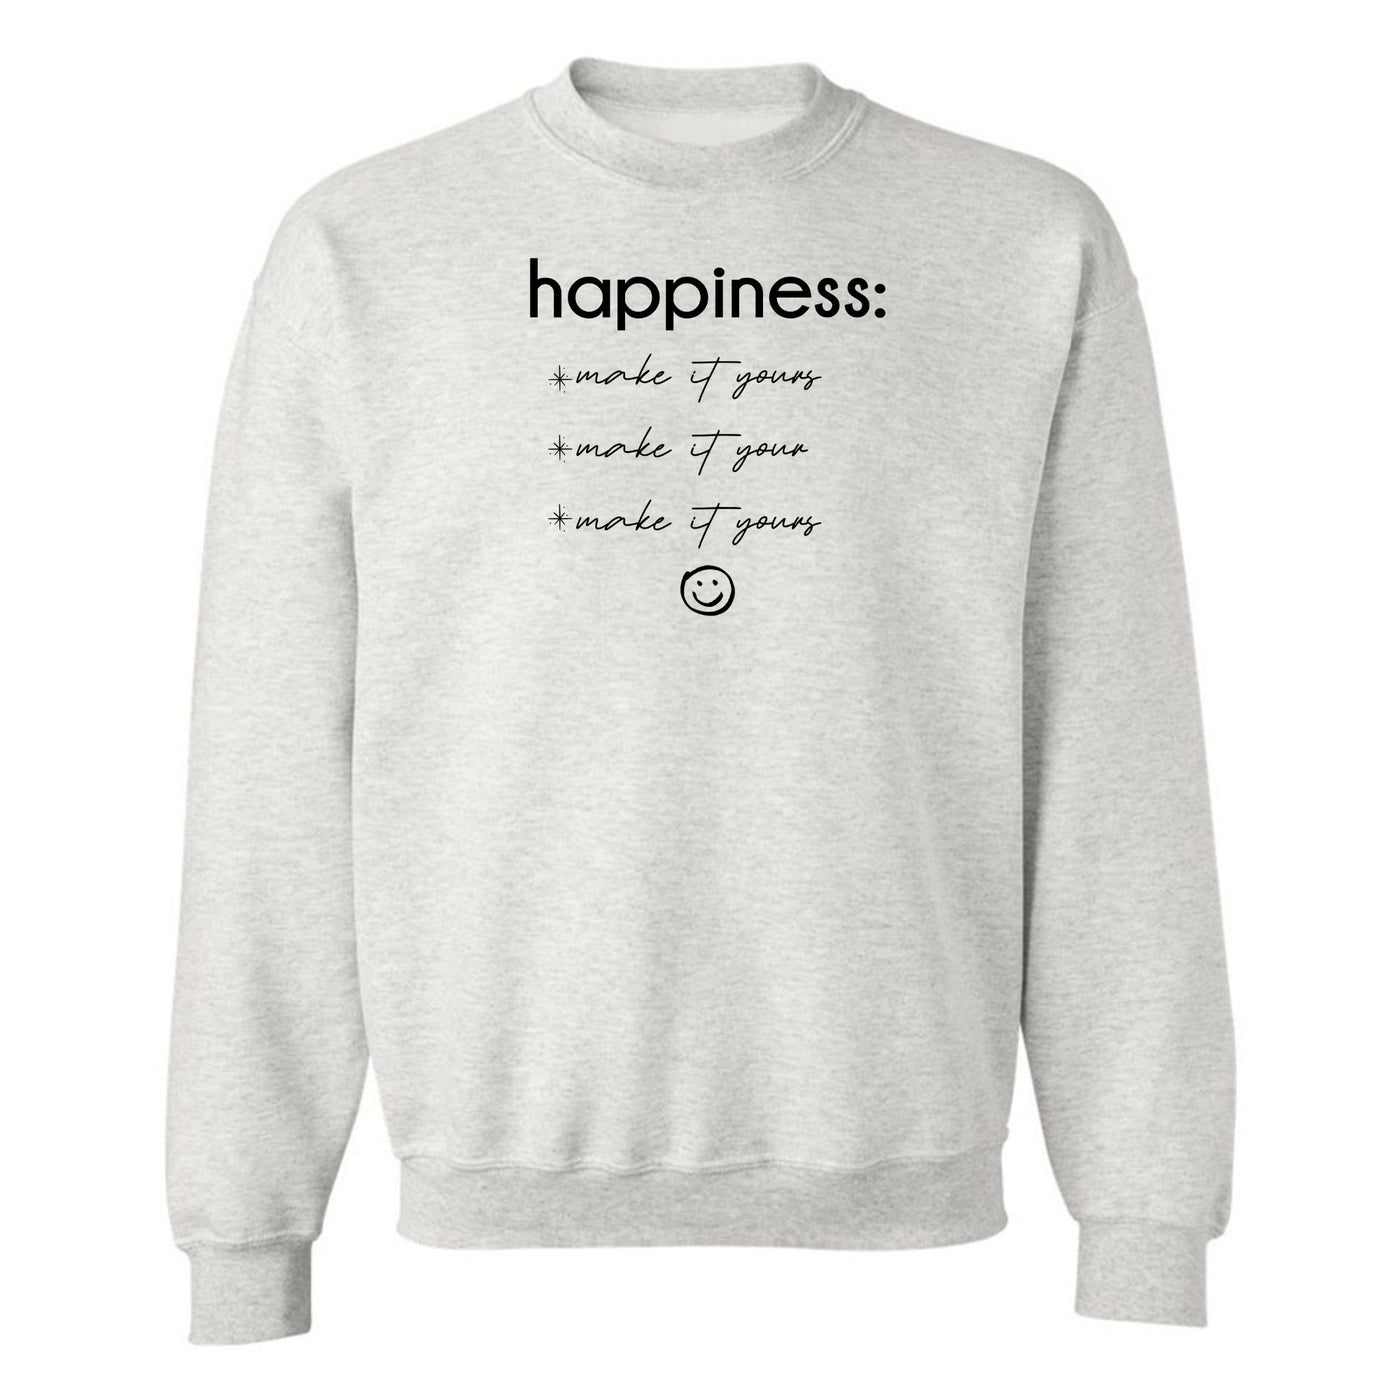 Make It Yours™ 'Happiness Checklist' Crewneck Sweatshirt